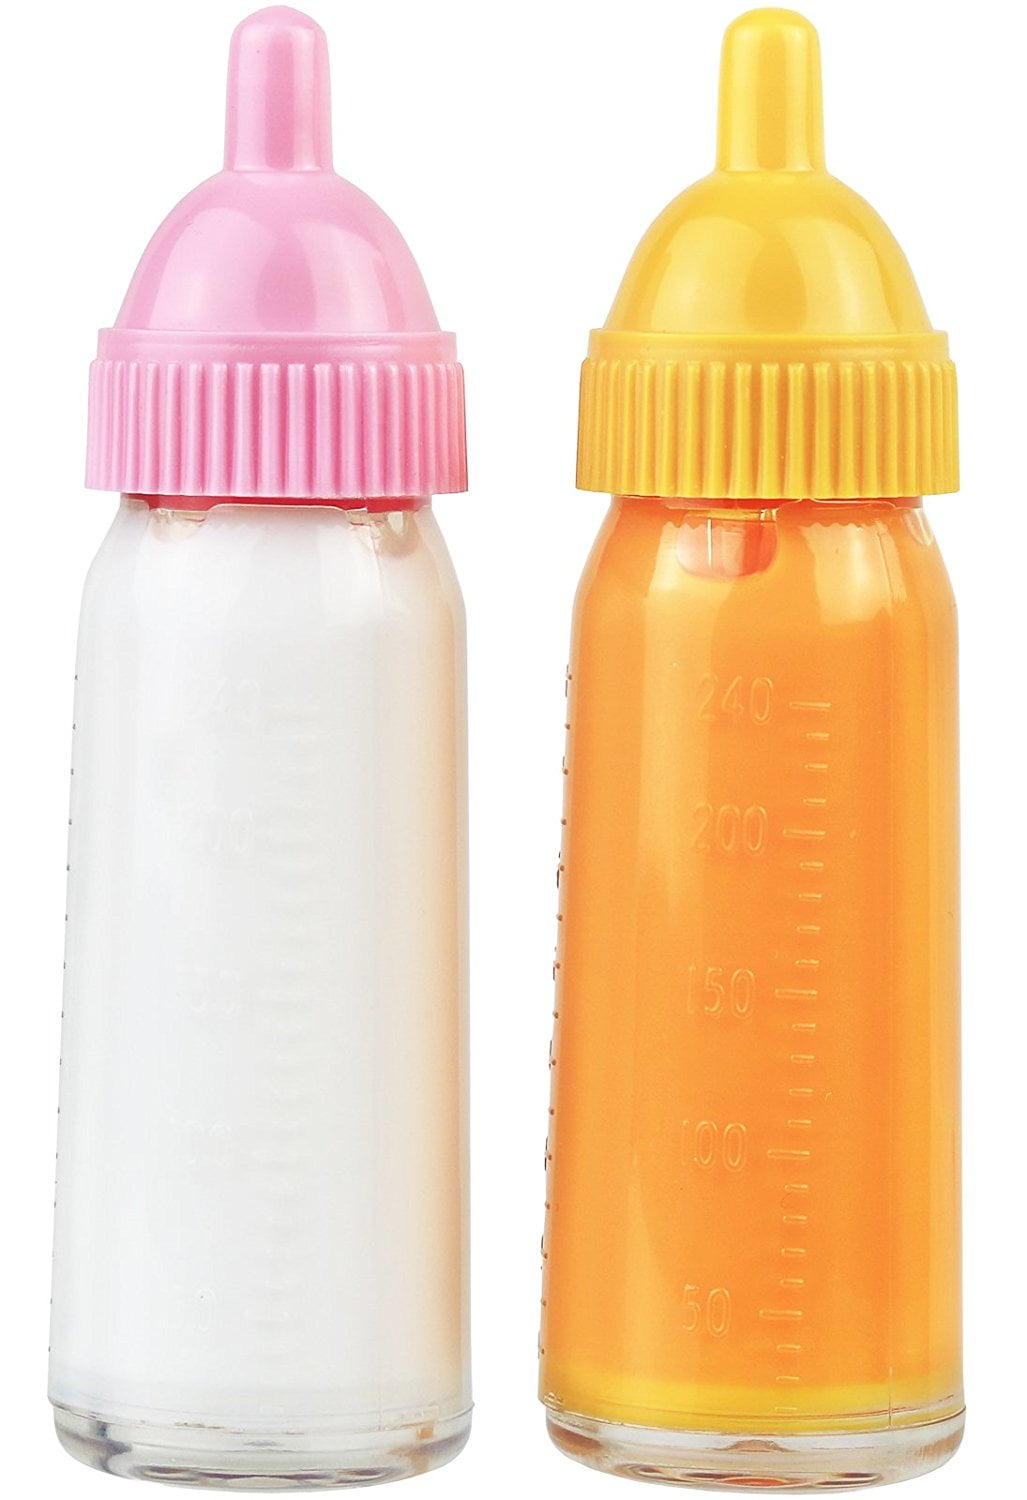 GLASS Baby Bottles Old Fashioned Style w/Formula Recipes  Reborn Dolls U Get 8! 